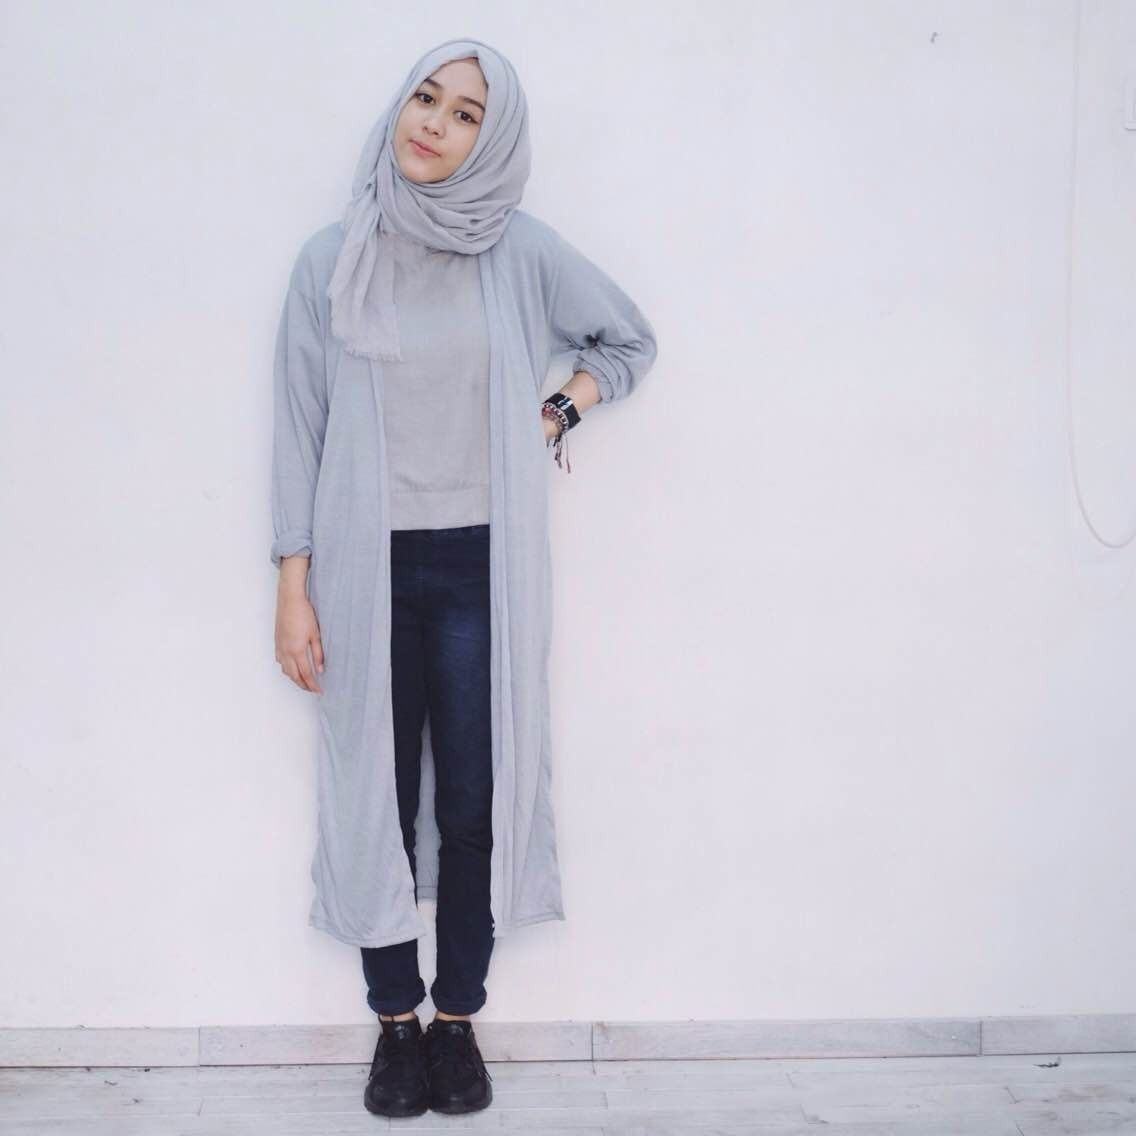 7 contekan gaya baju muslim casual keren tapi tetap sopan